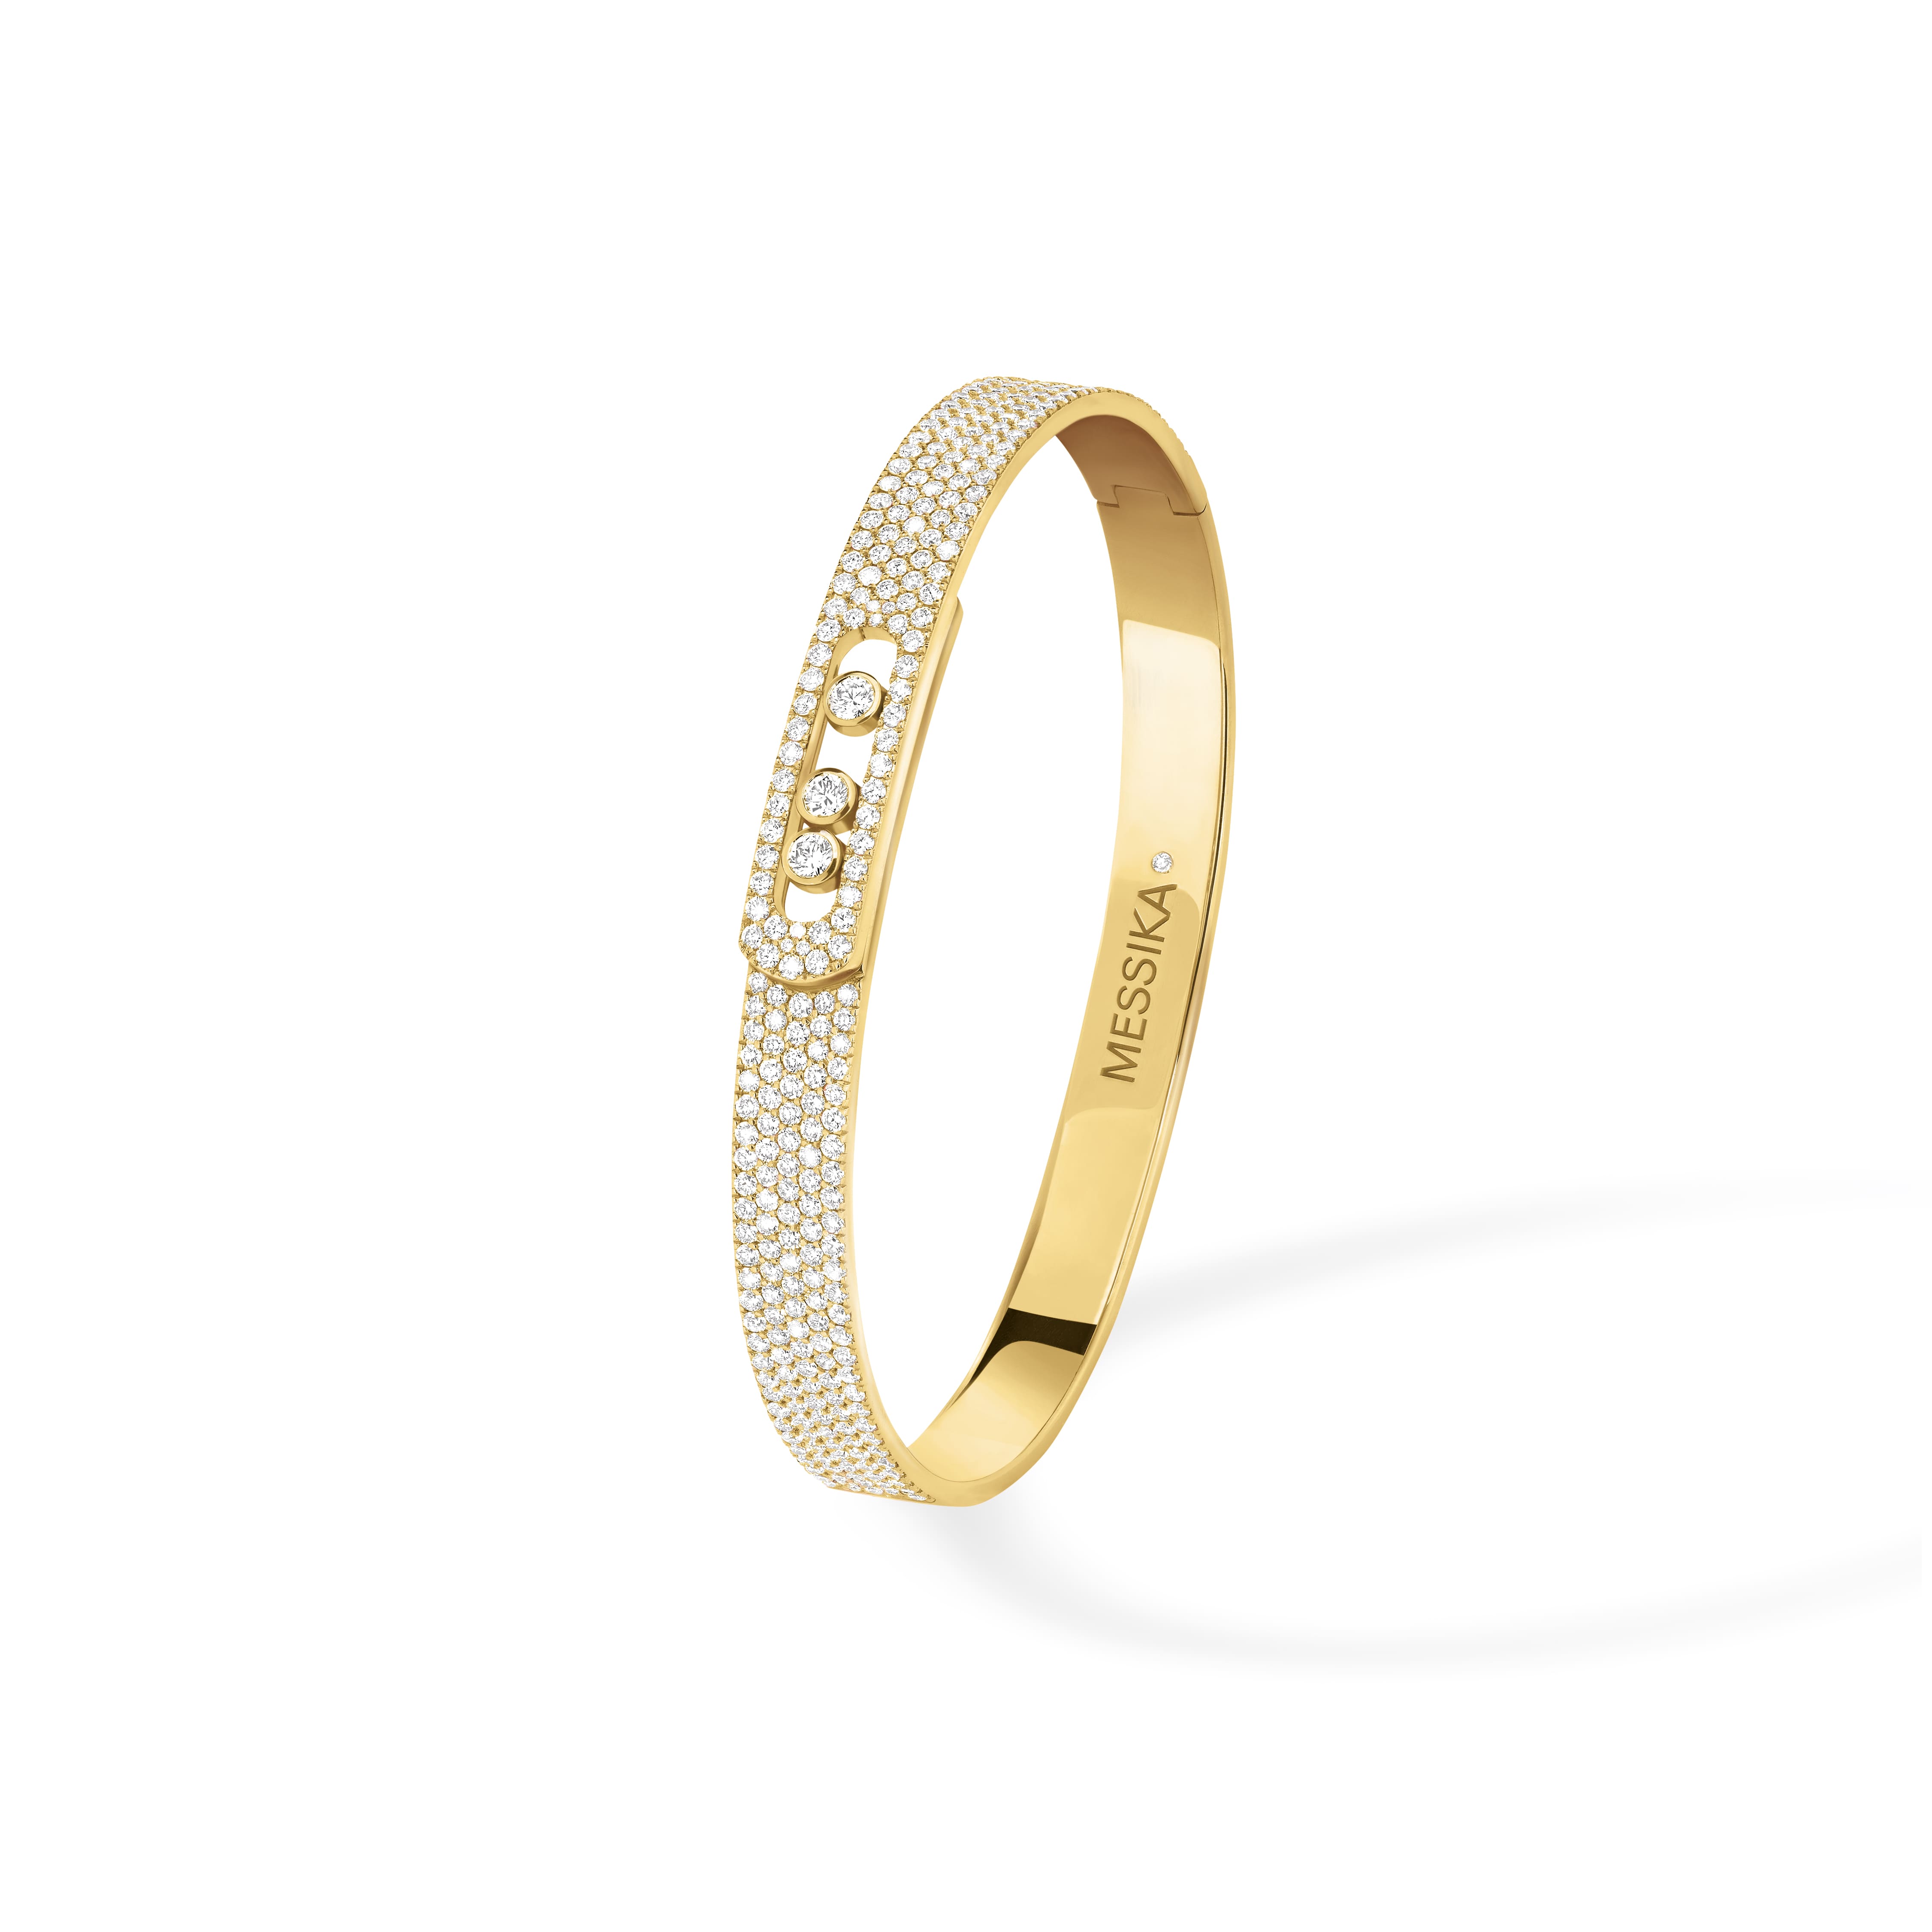 Messika Move Romane 18K White Gold Bangle Diamond Bracelet, Size Small, Bracelets Bangle Bracelets